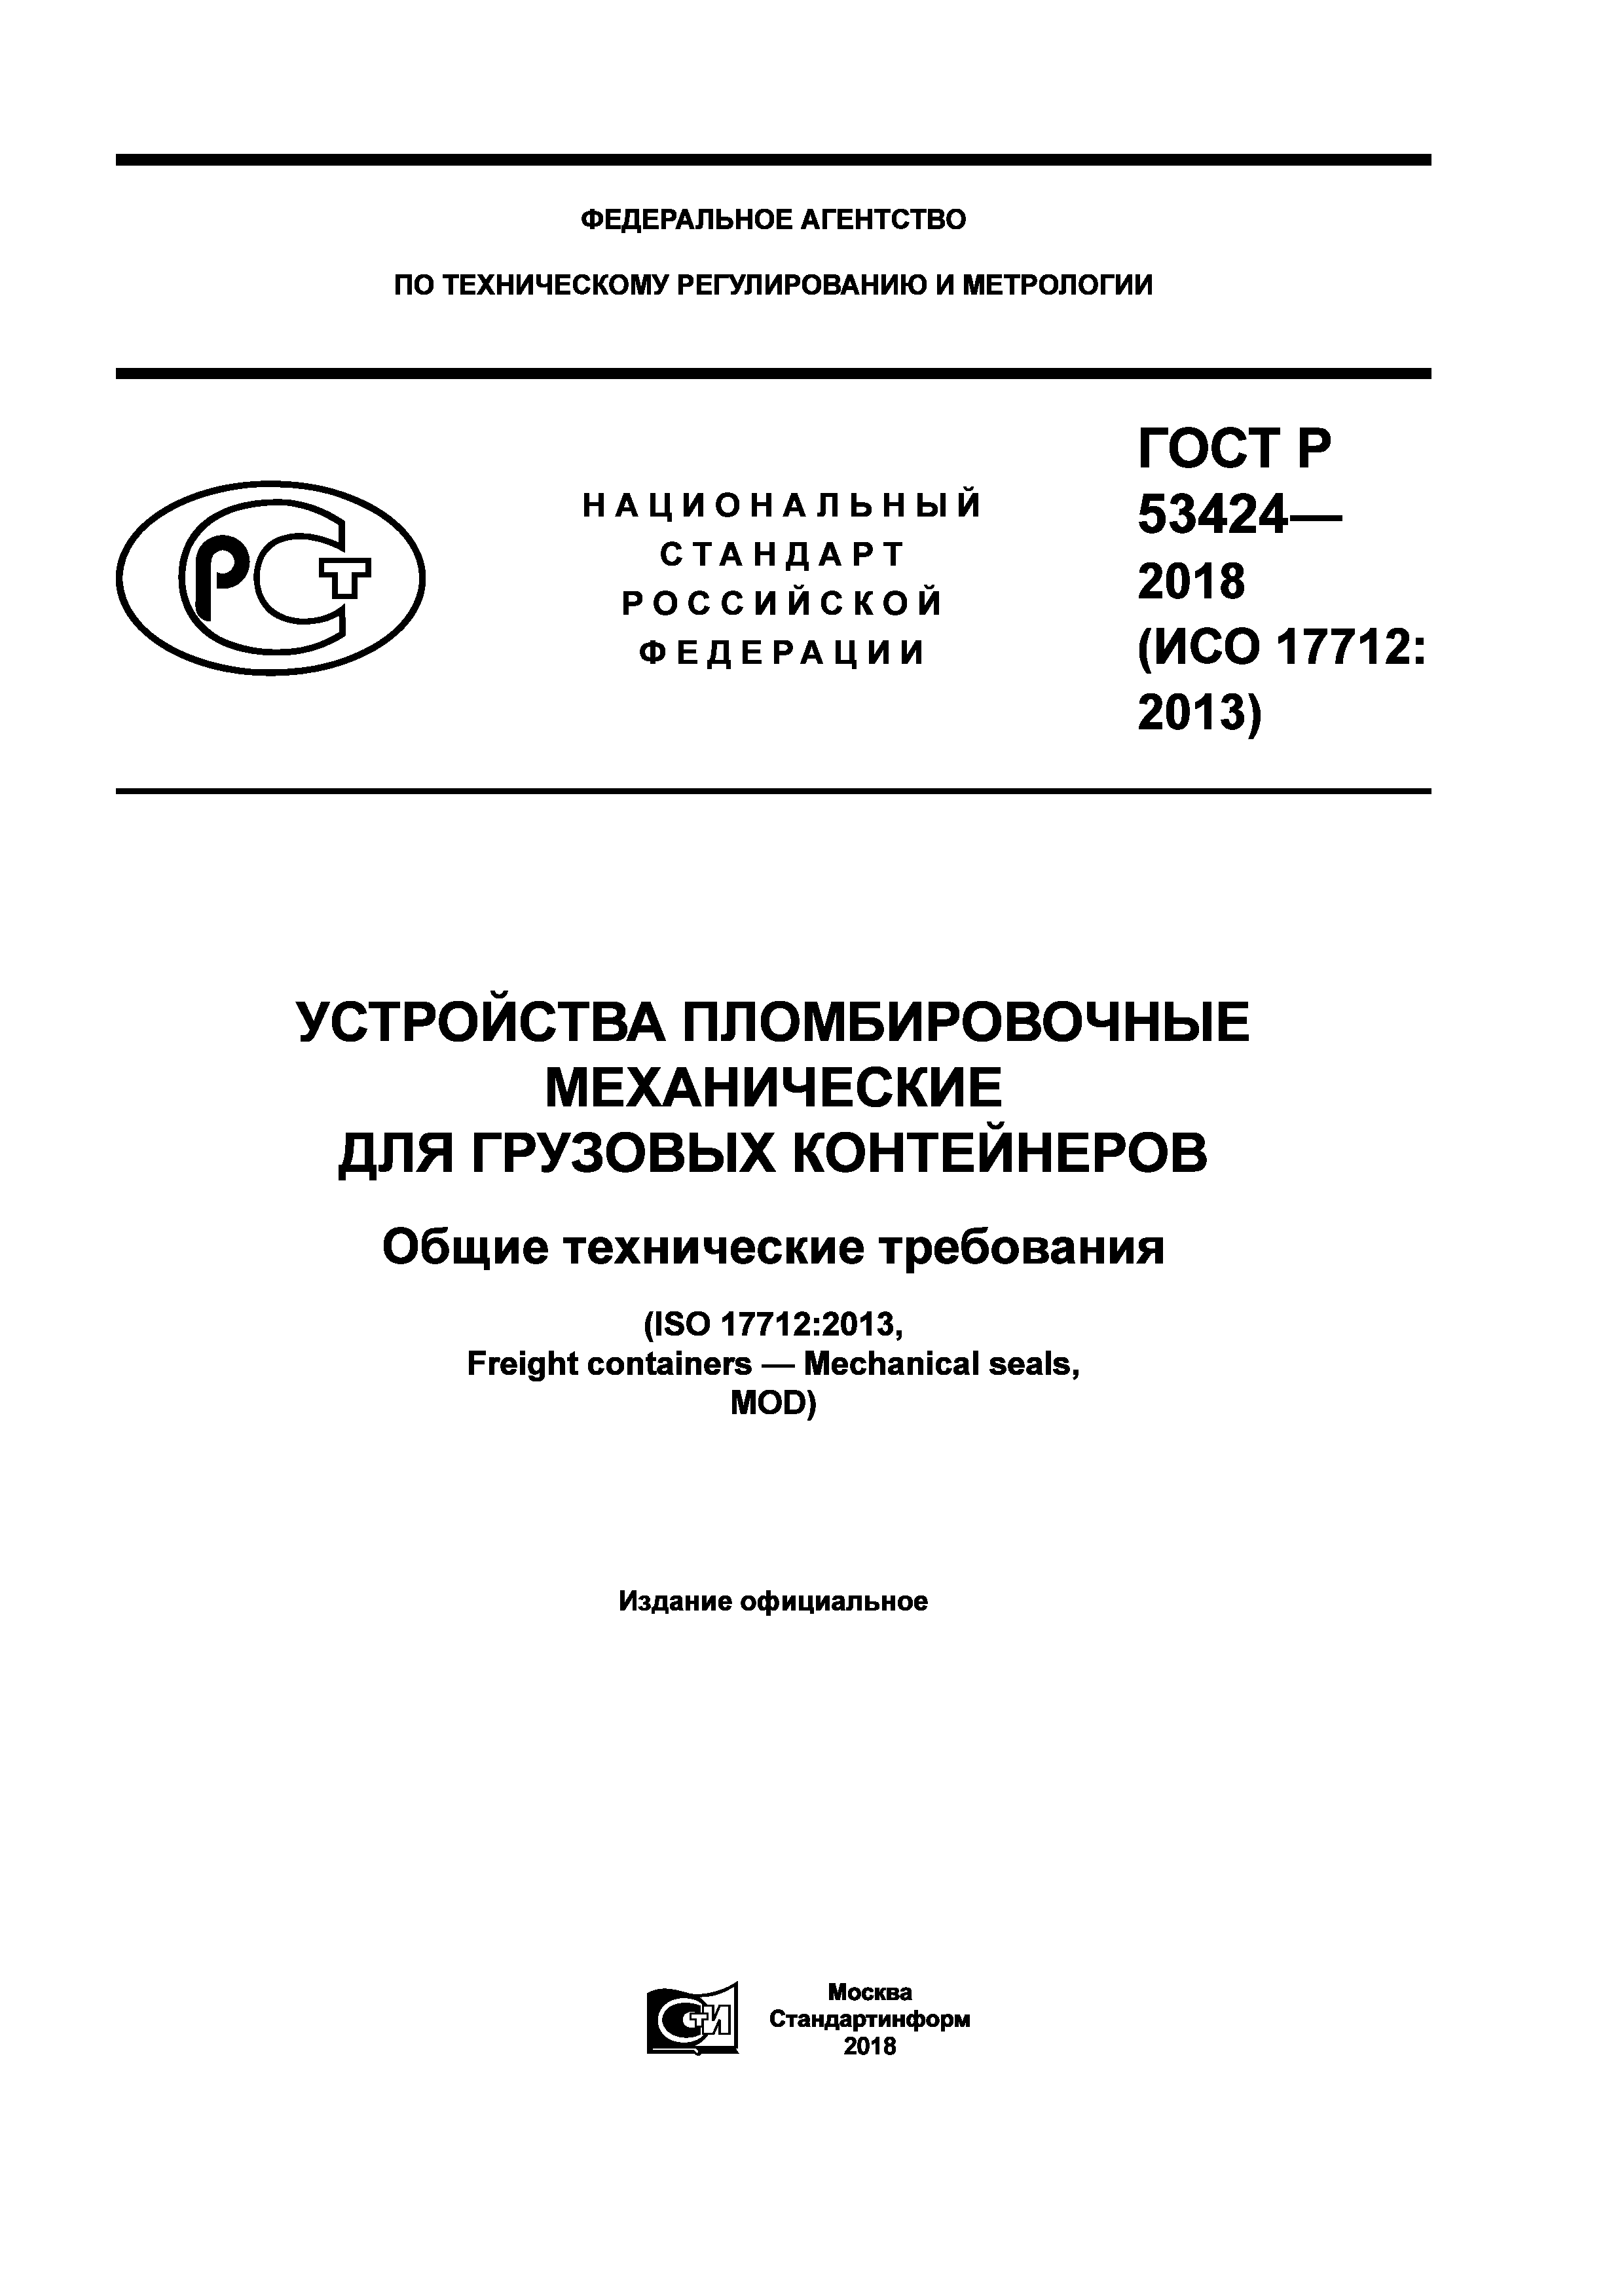 ГОСТ Р 53424-2018